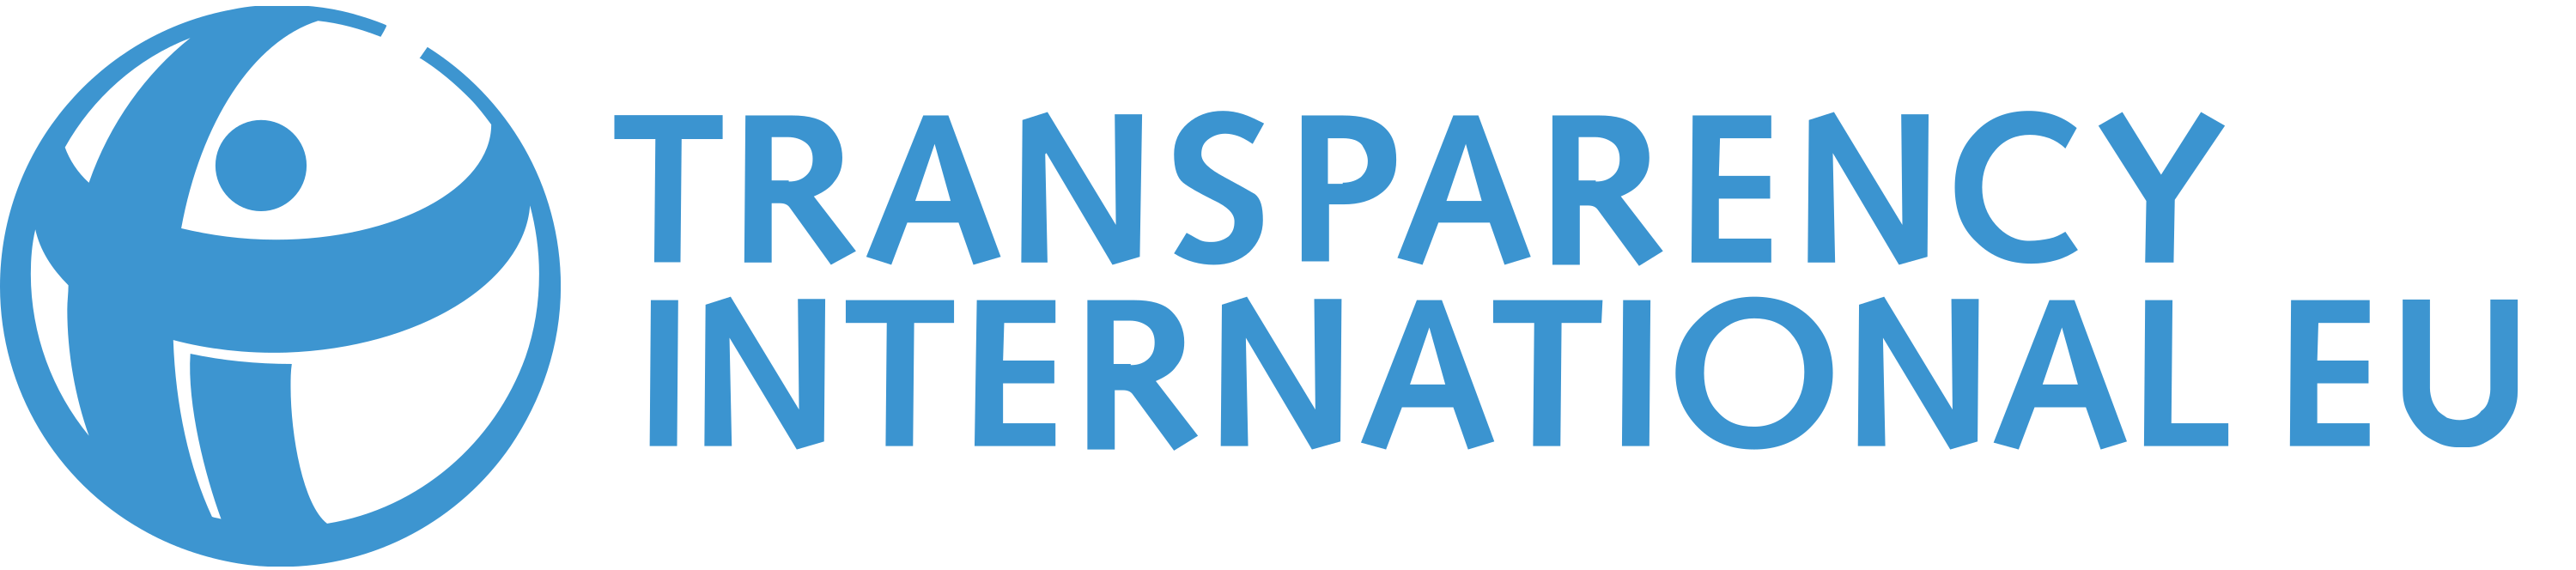 Transparency International Logo